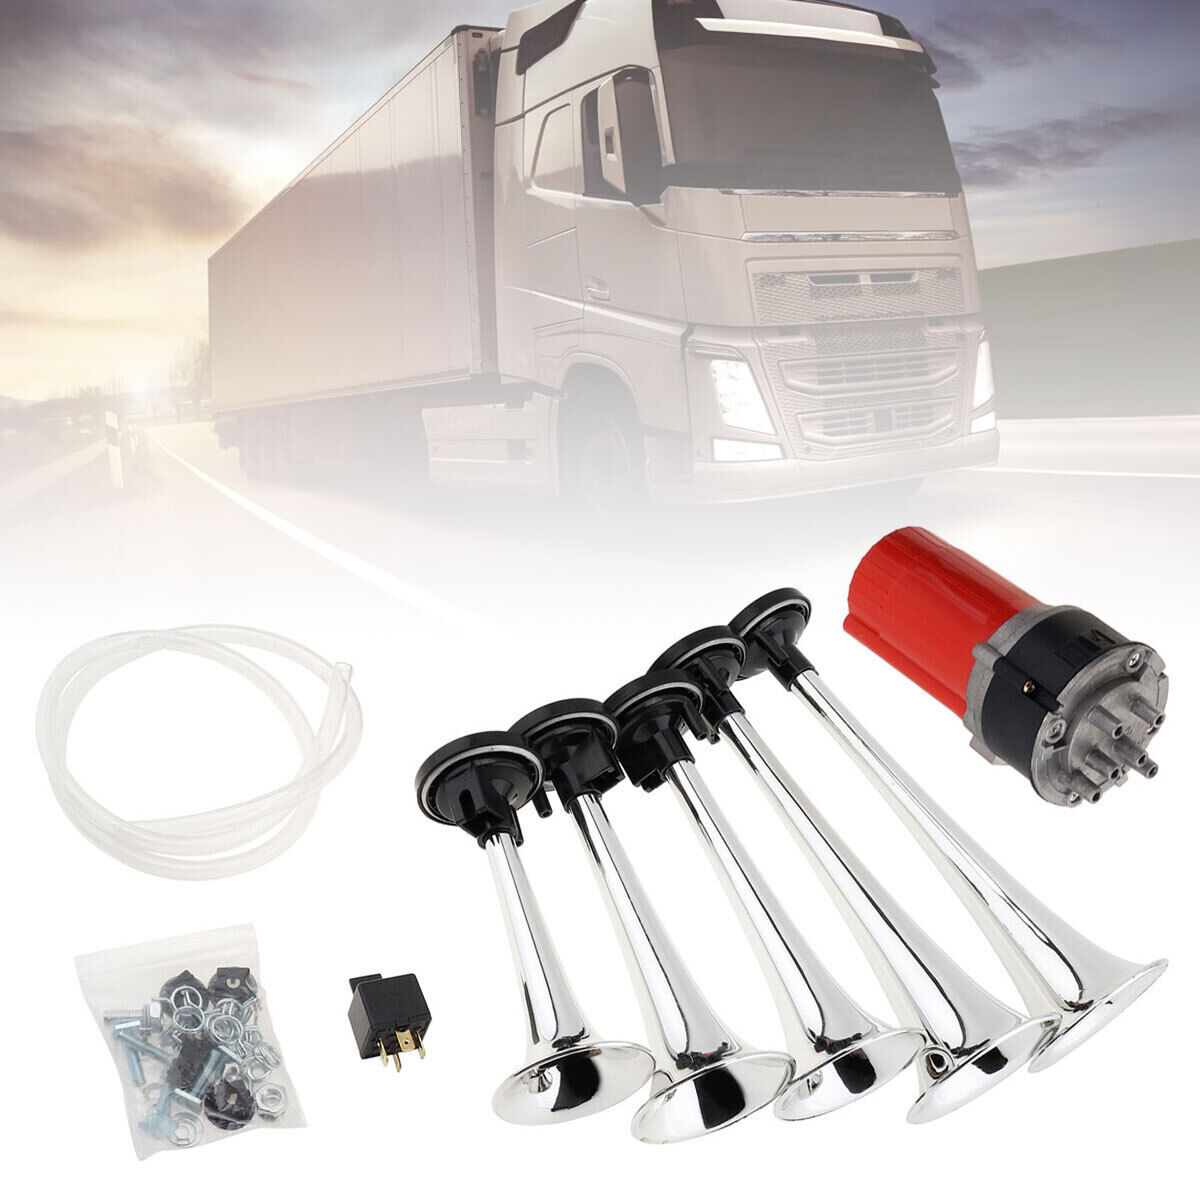 12V Air Compressor Horns Kit For Cars Trucks Busses Boats Any 12 Volt Vehicles